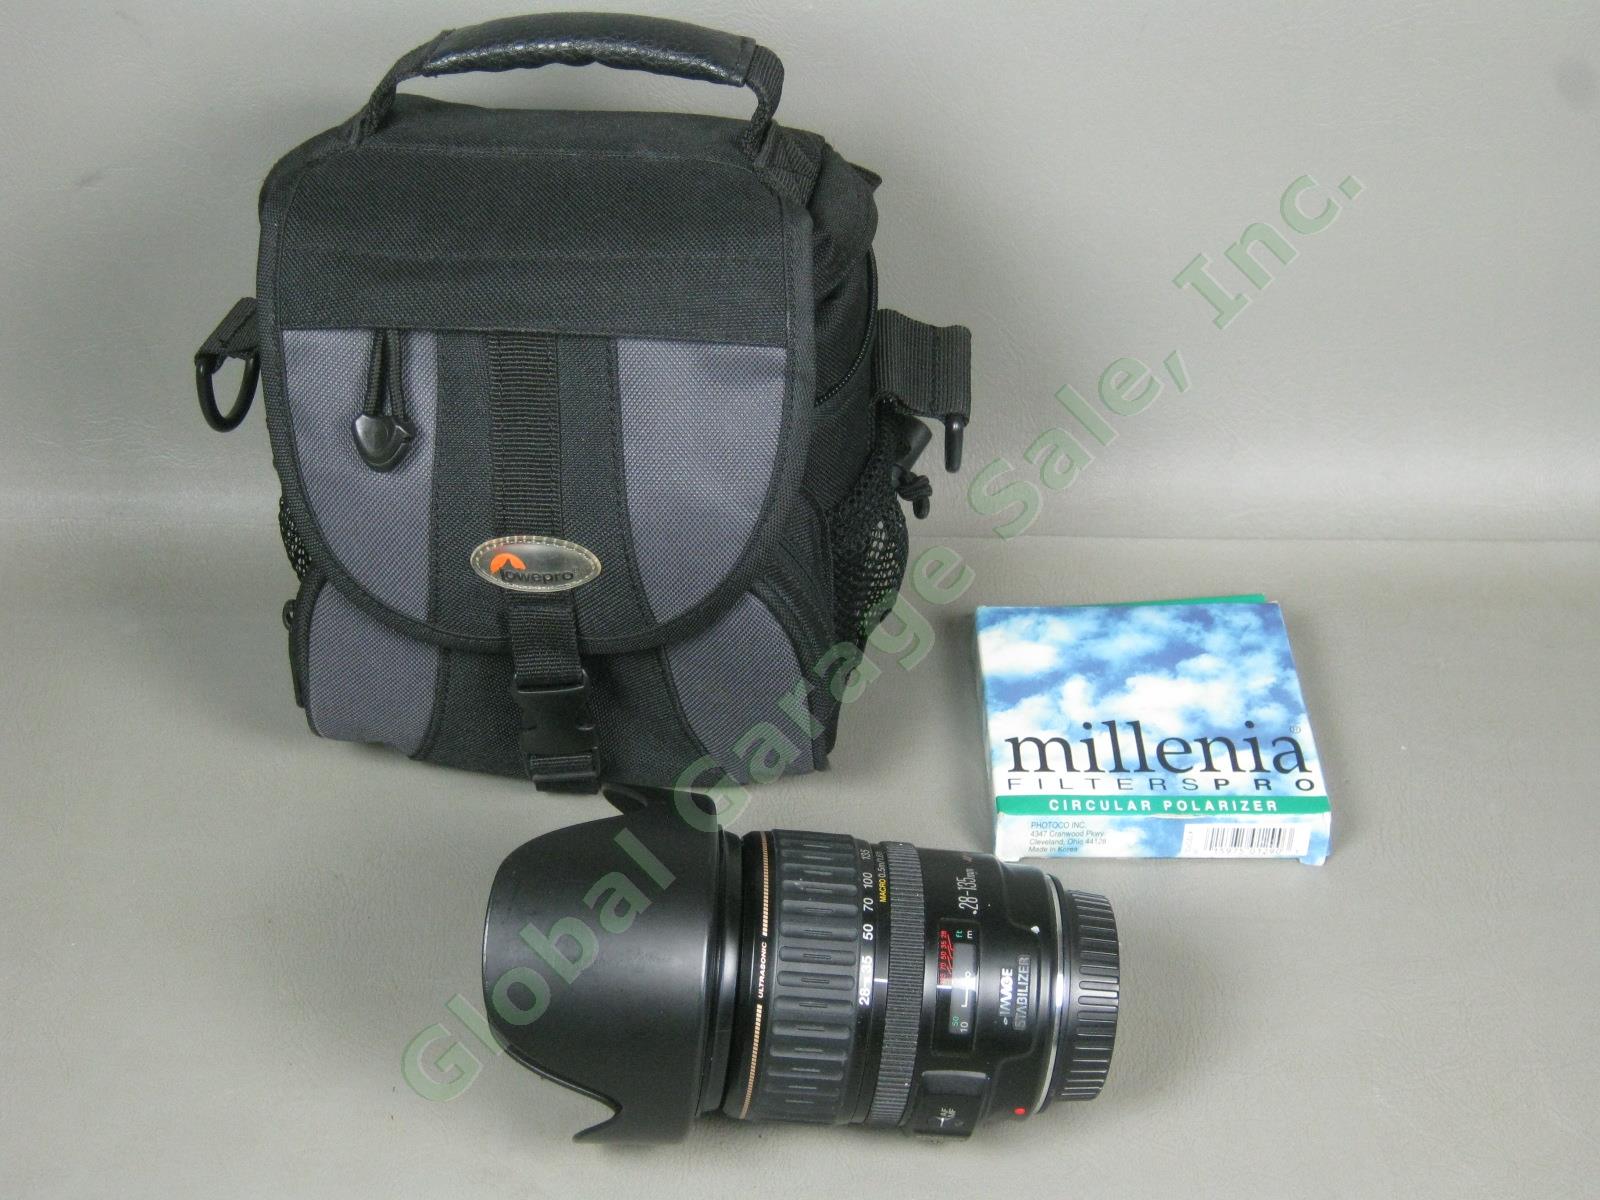 Canon EF 28-135mm Zoom Lens f/3.5-5.6 IS + Filters + Lowe Pro EX120 Case Bundle